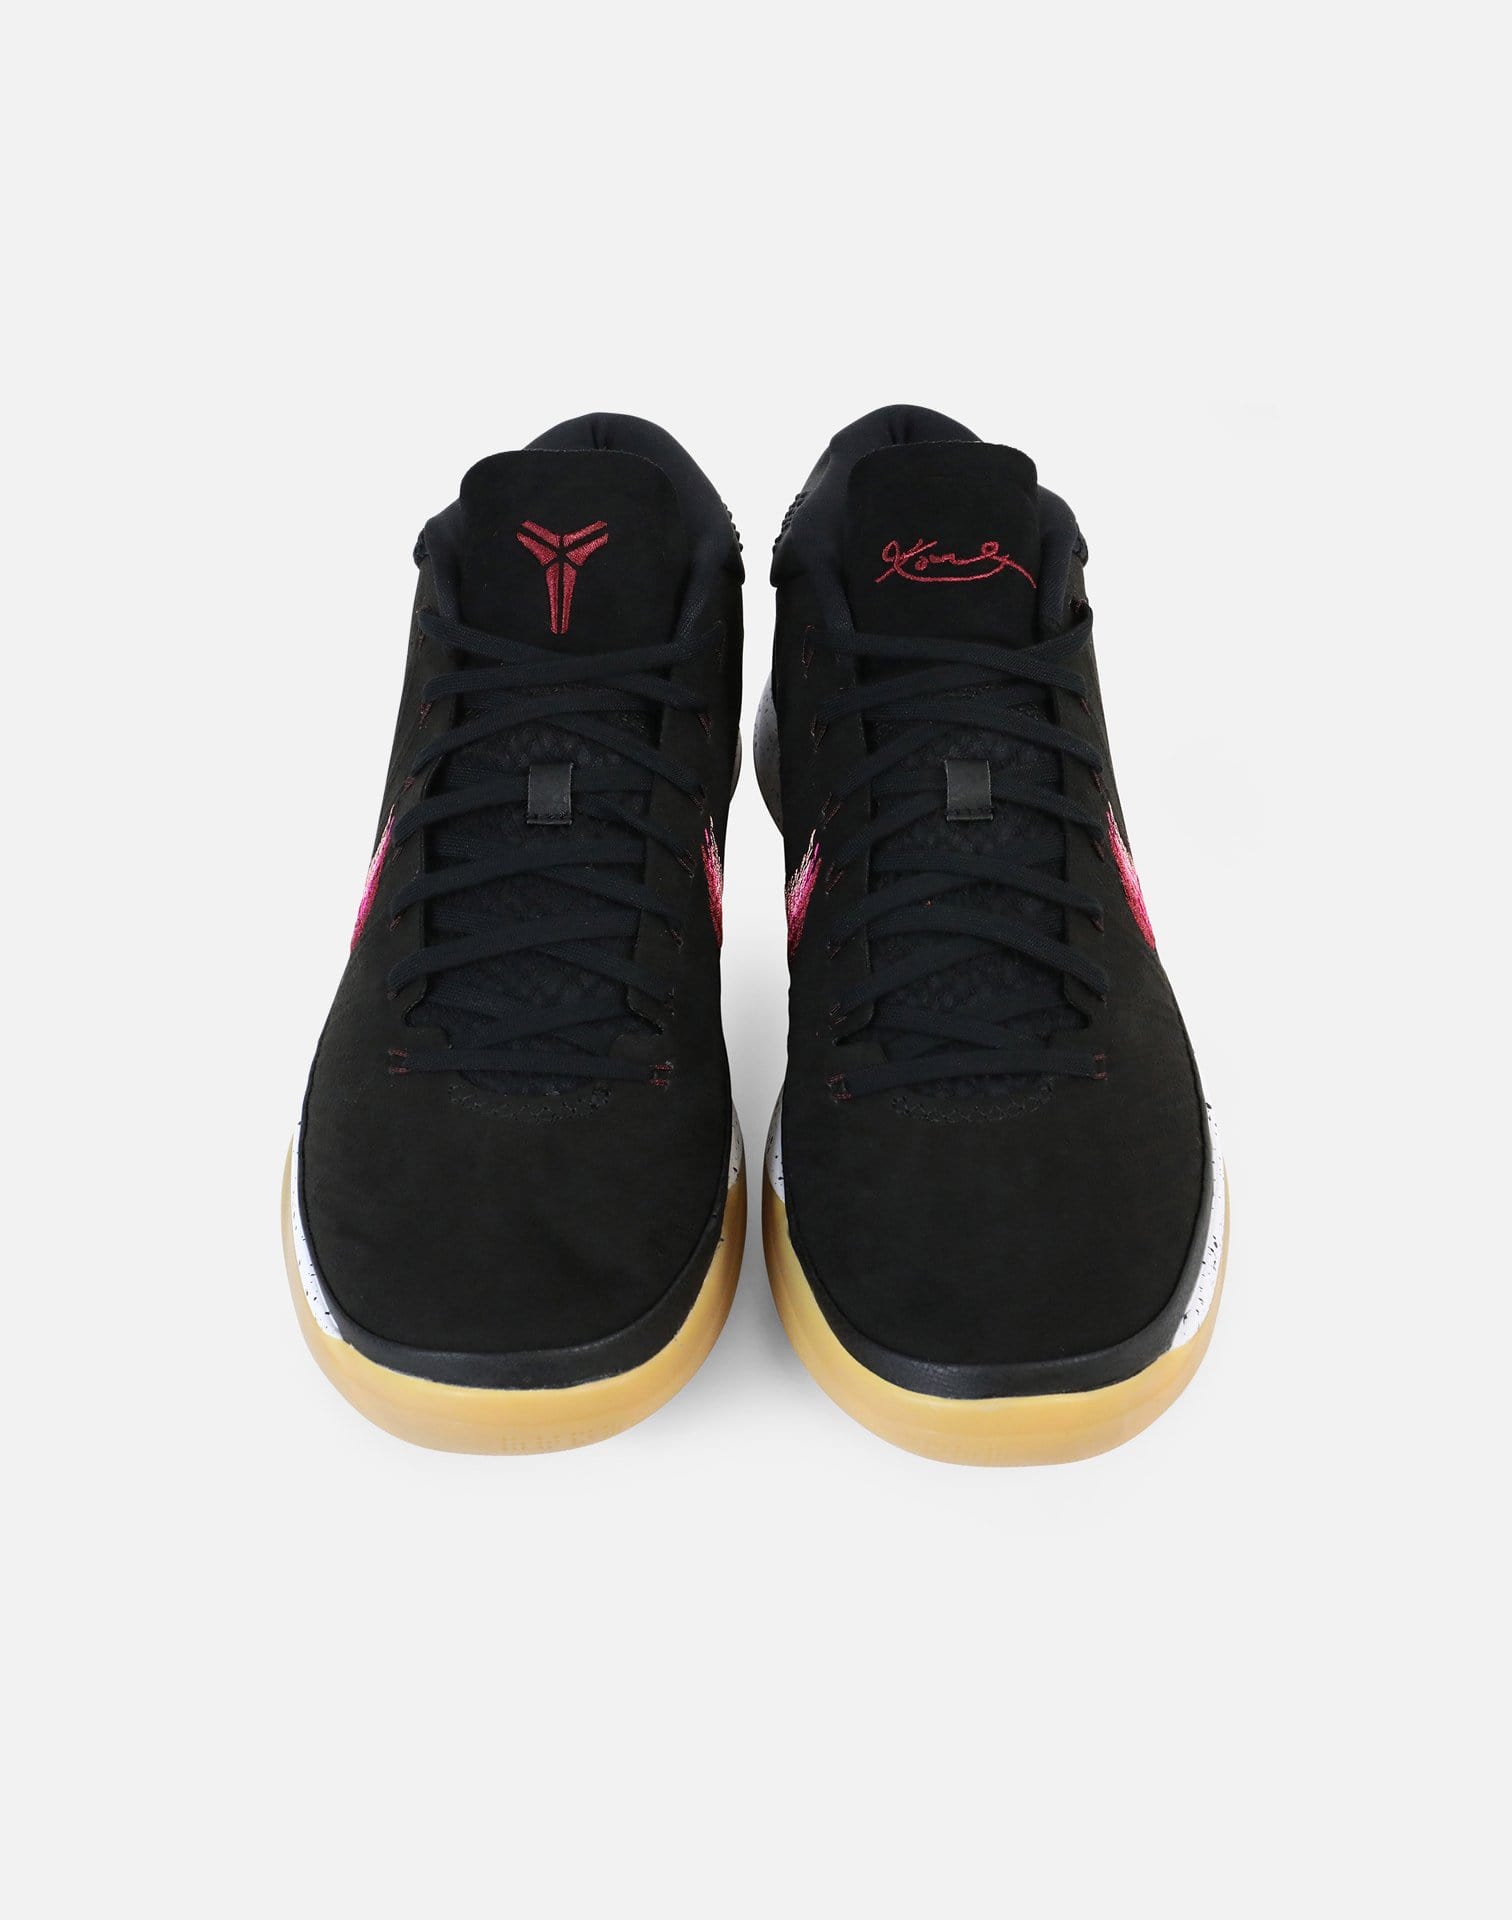 Nike Kobe A.D. (Black/Sail-Light Gum Brown)